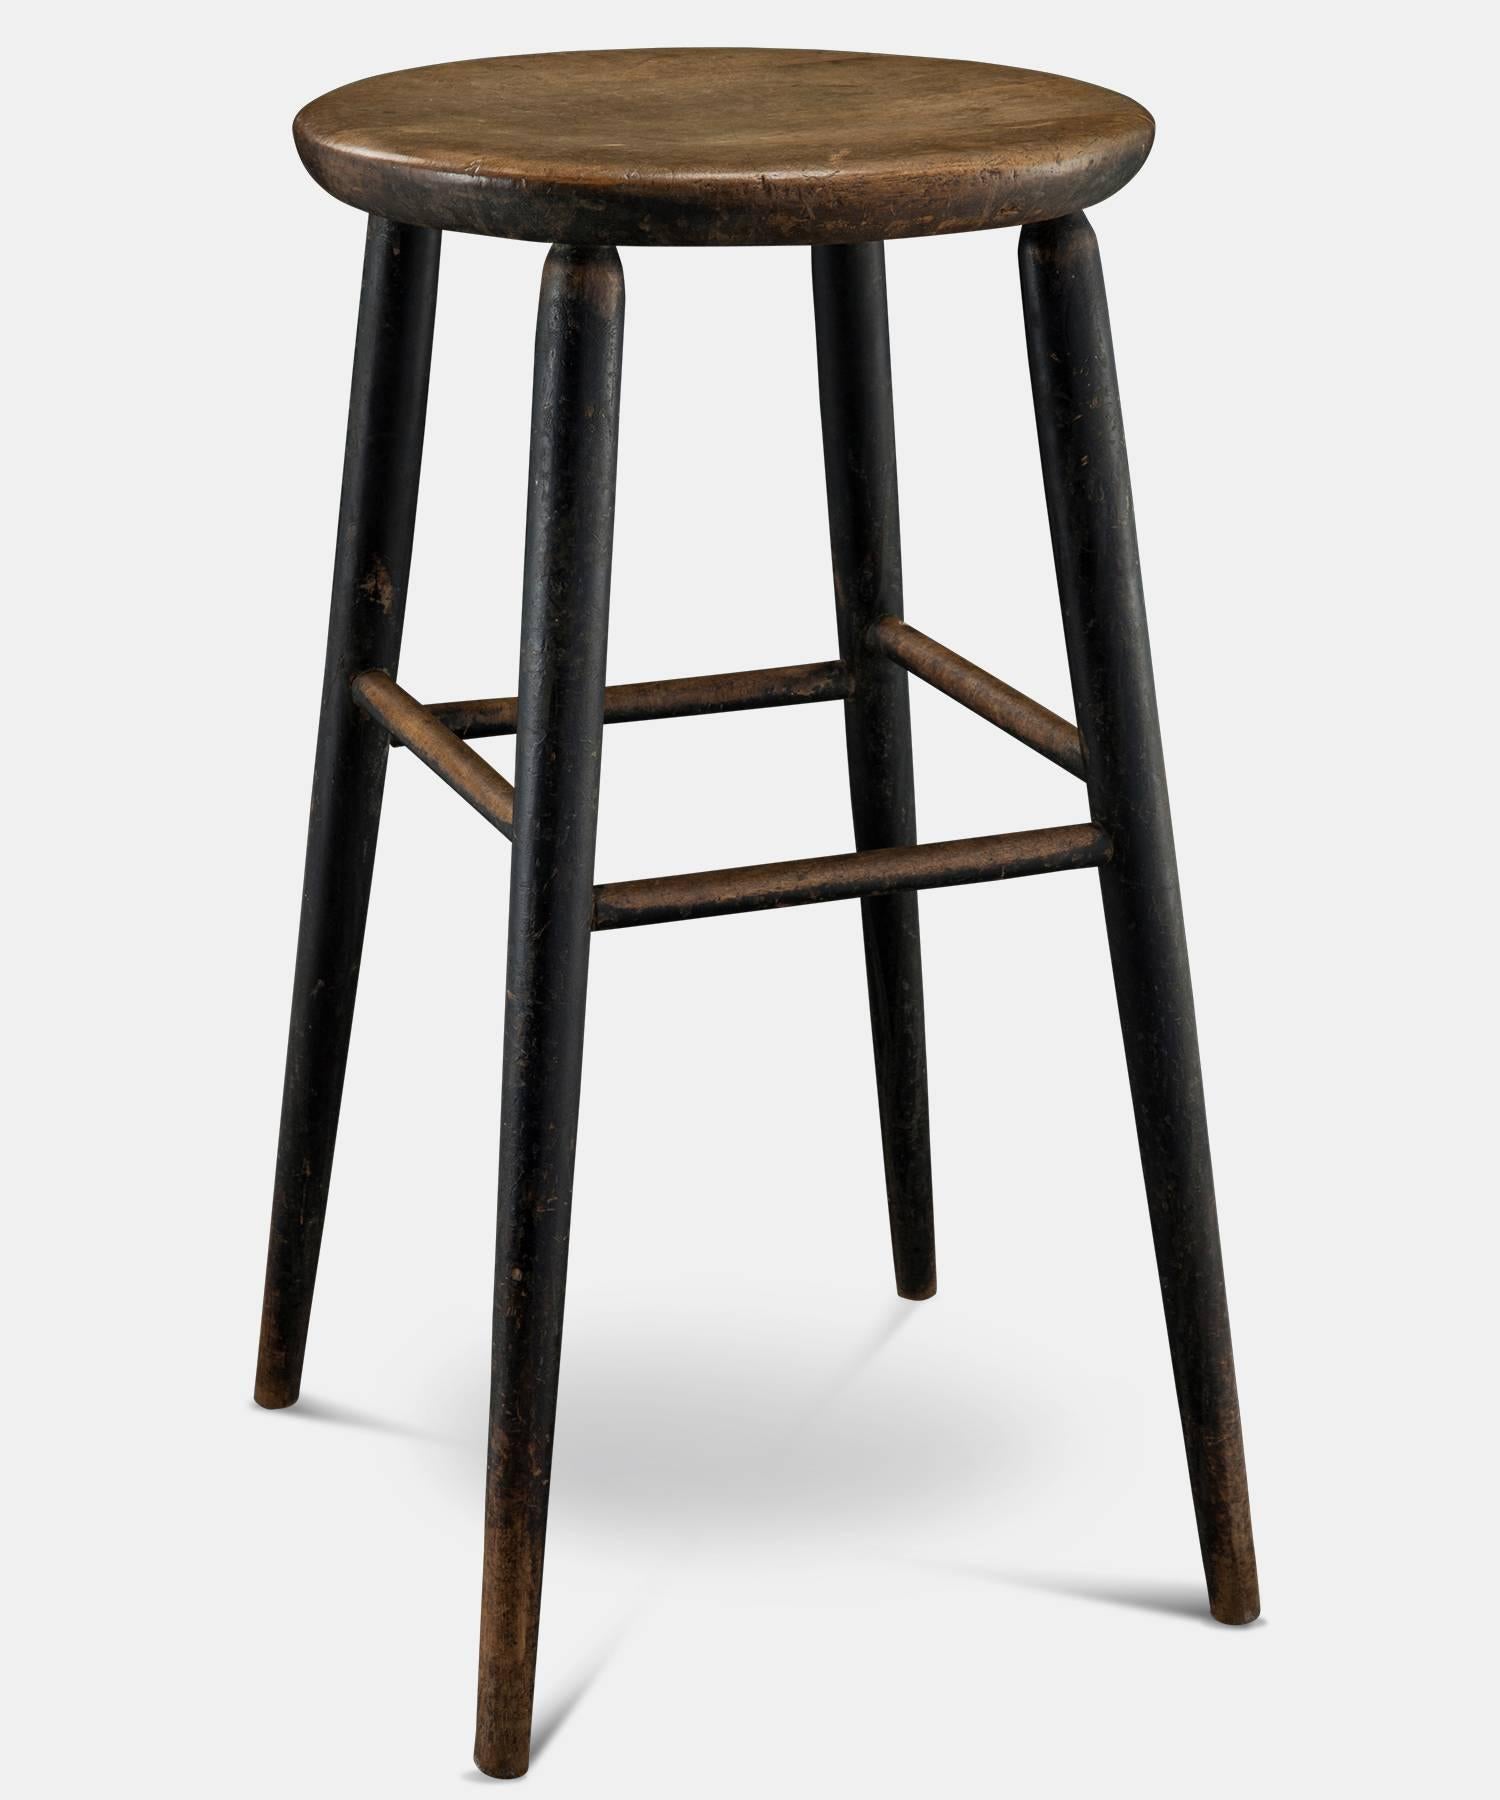 Tall maple stool with worn original ebonized finish.